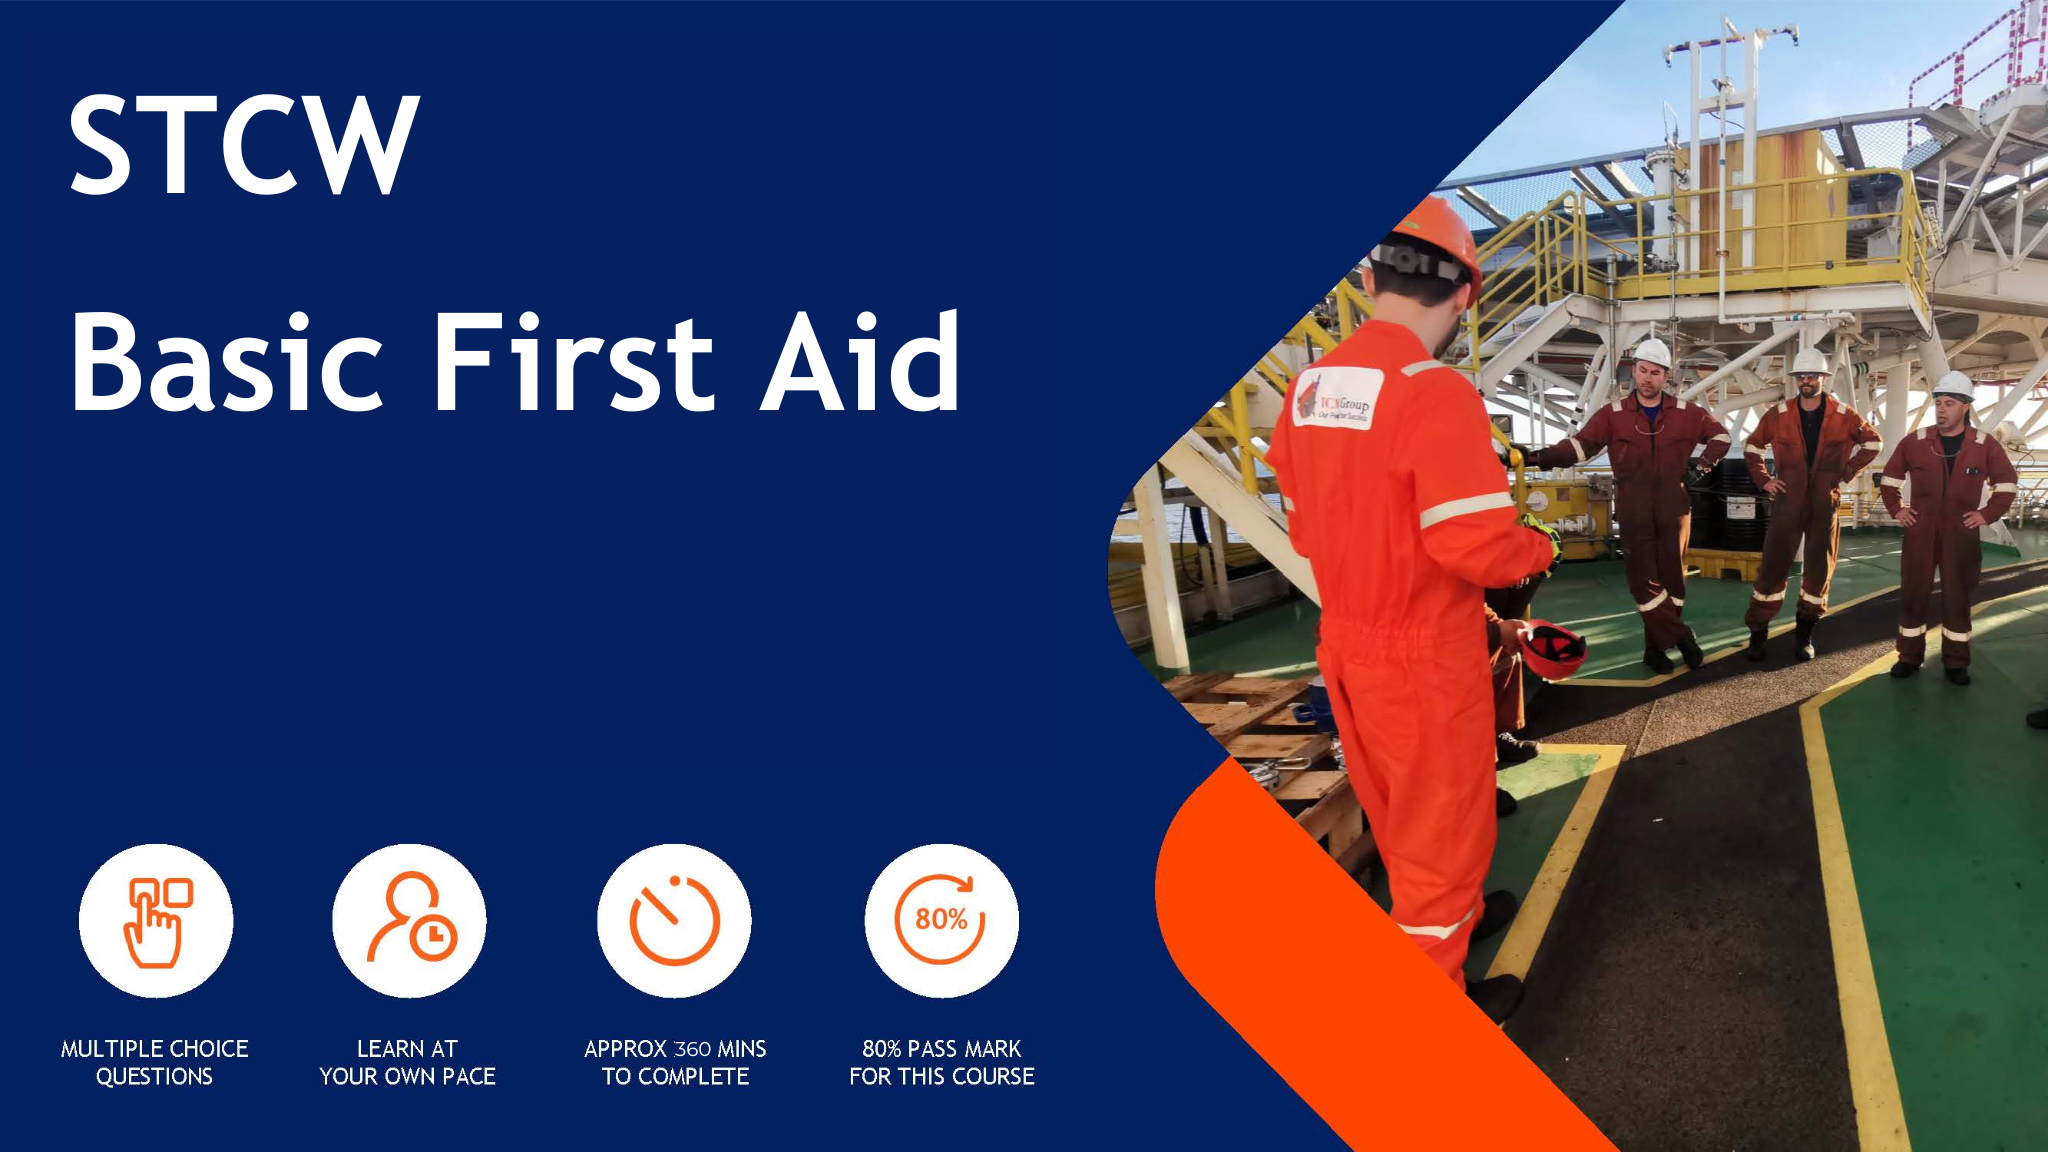 STCW Basic First Aid